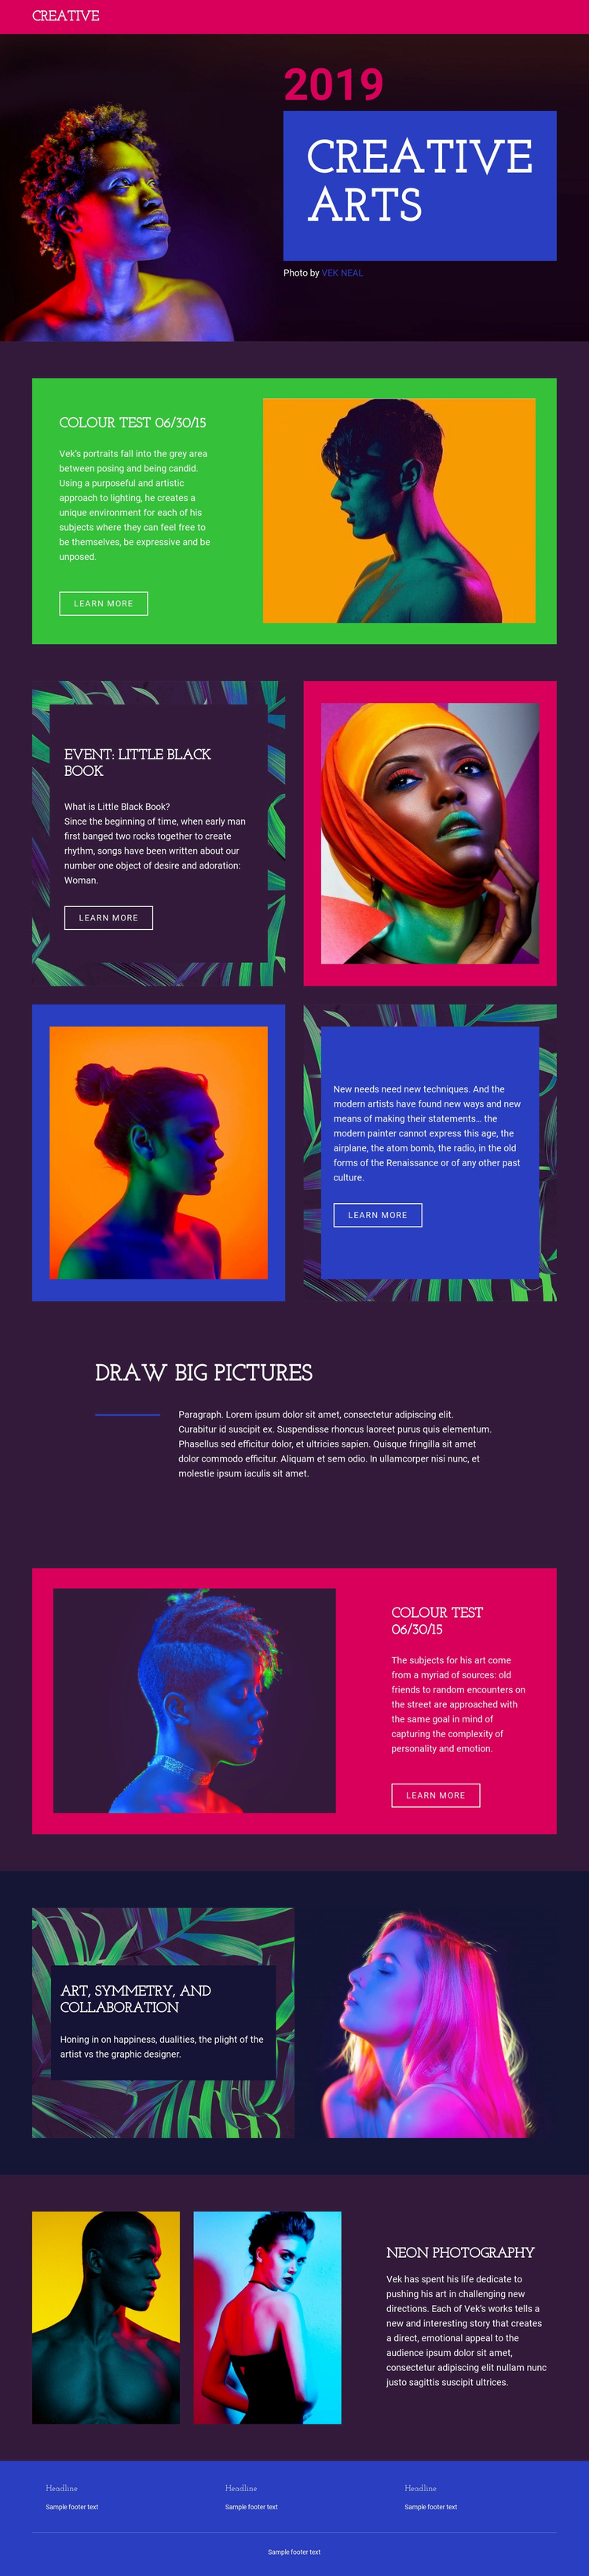 Creative Arts Website Design